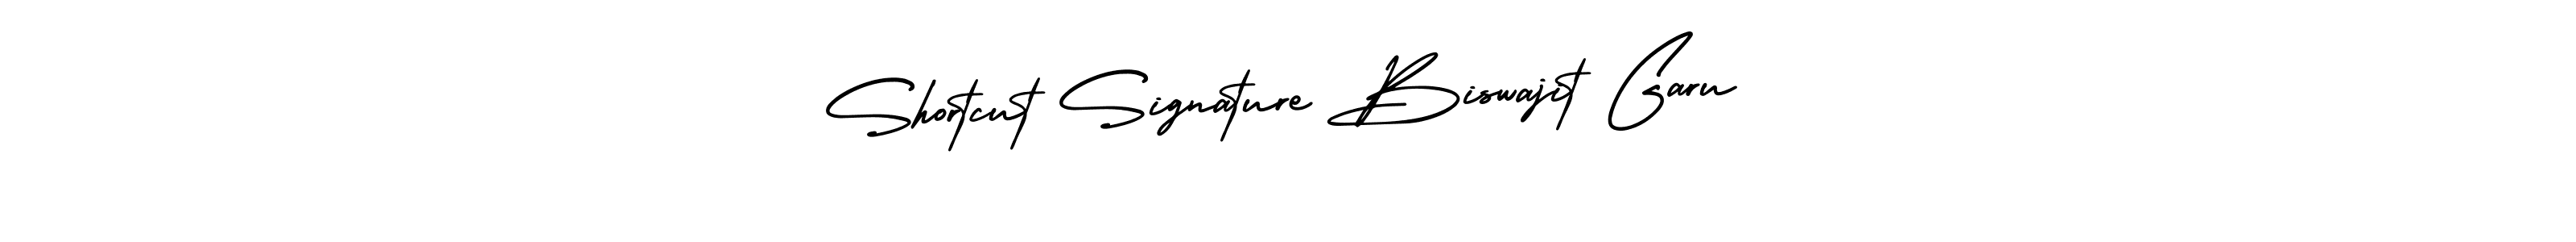 How to Draw Shortcut Signature Biswajit Garu signature style? AmerikaSignatureDemo-Regular is a latest design signature styles for name Shortcut Signature Biswajit Garu. Shortcut Signature Biswajit Garu signature style 3 images and pictures png